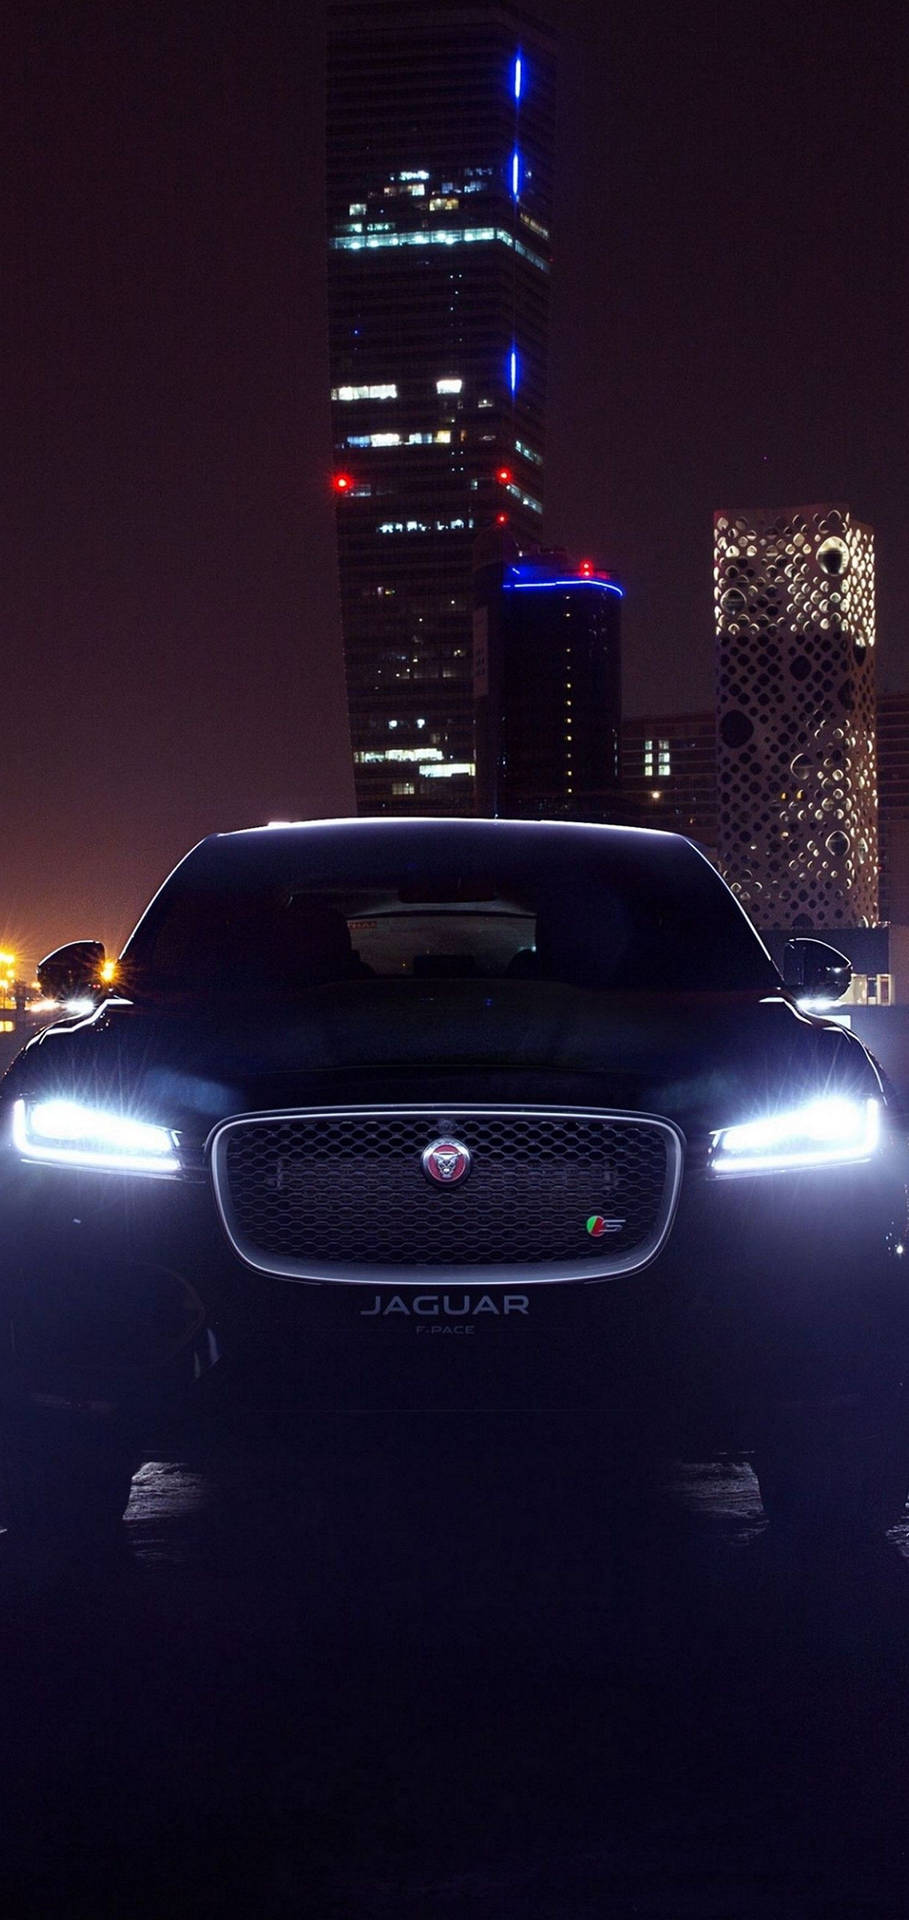 Experimentael Poder Y La Elegancia De Un Automóvil Jaguar En La Noche. Fondo de pantalla